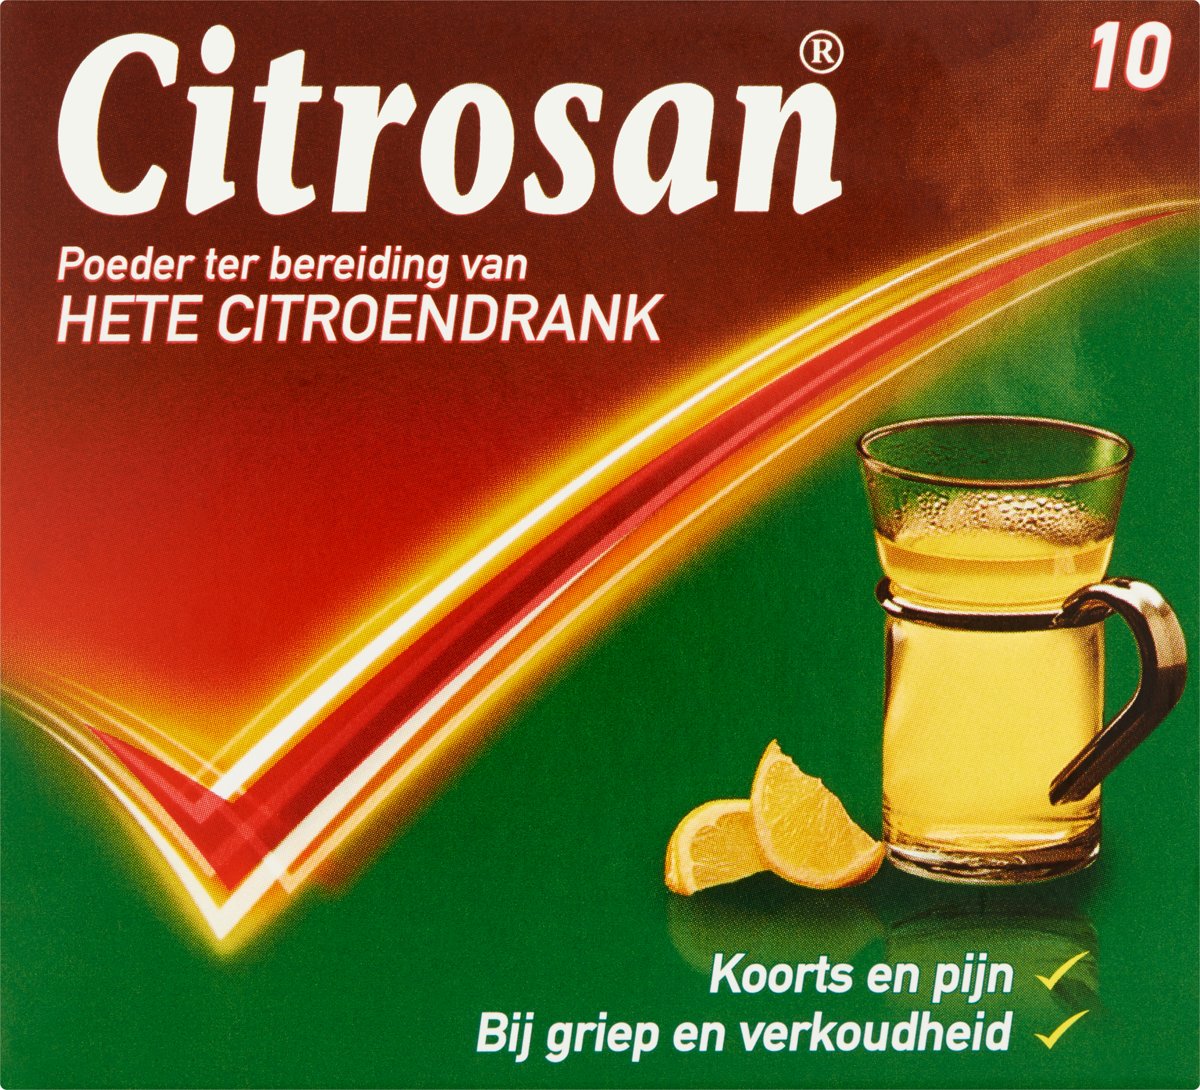 Foto van Citrosan Hete Citroendrank - Paracetamol & Vitamine C. Sachets met Poeder - 10 stuks